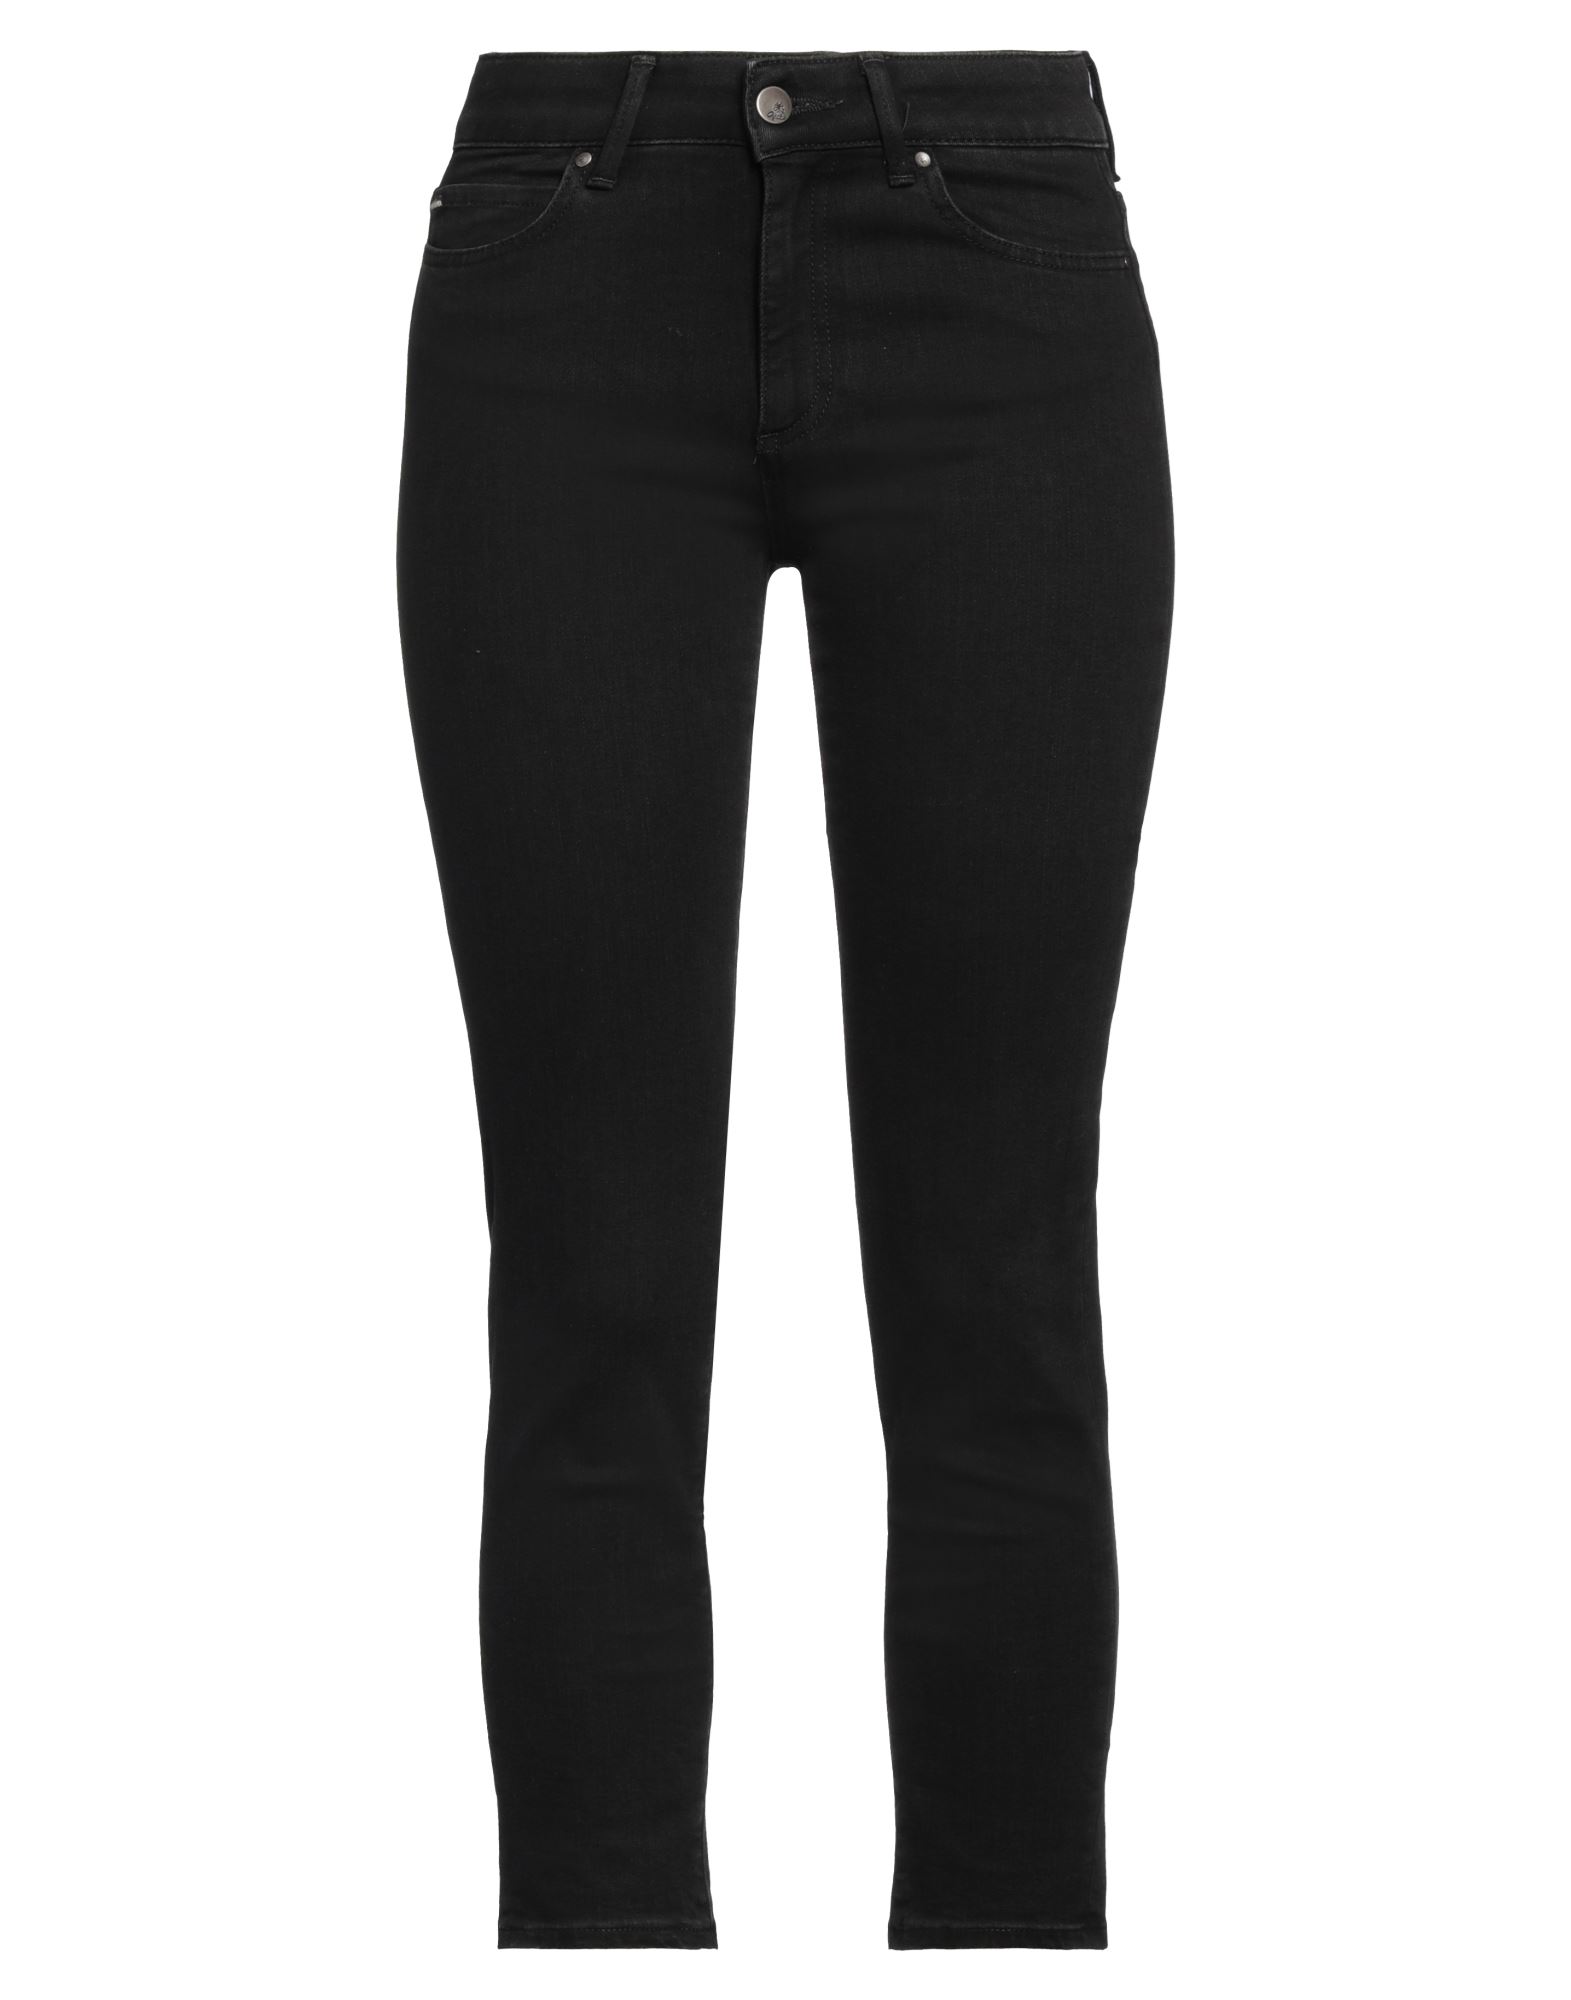 Cigala's Jeans In Black